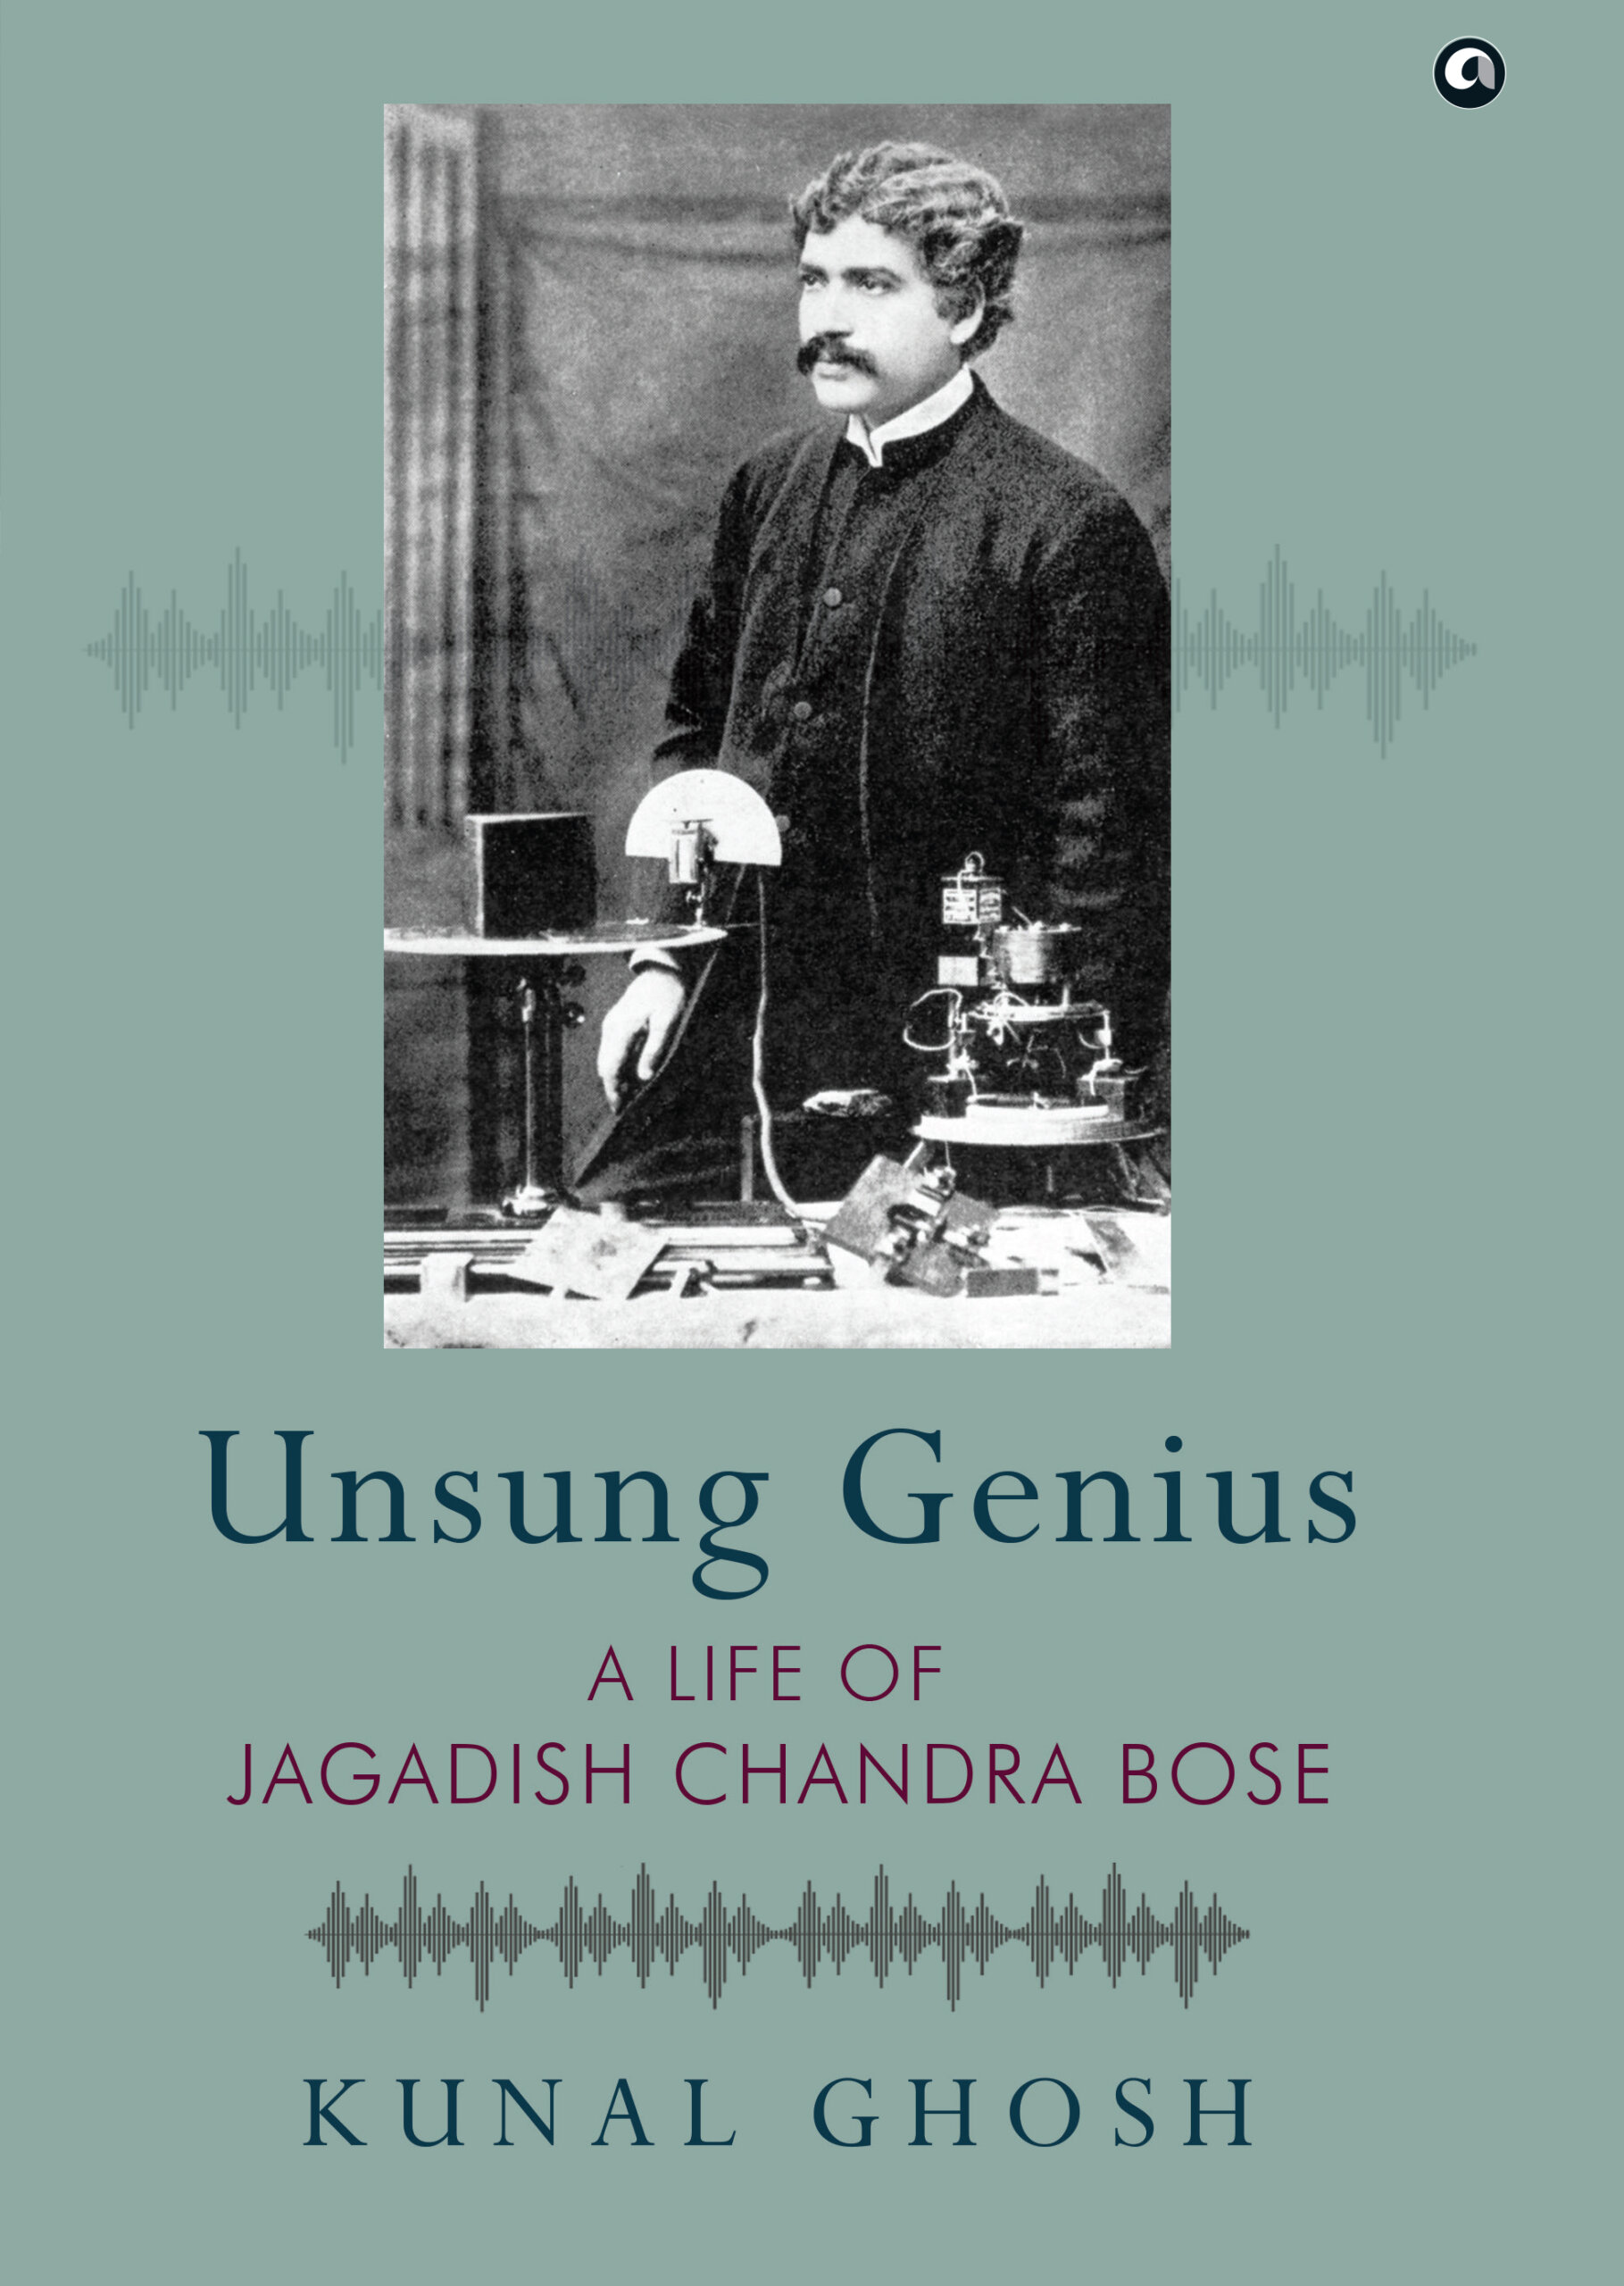 Unsung Genius: A Life of Jagadish Chandra Bose